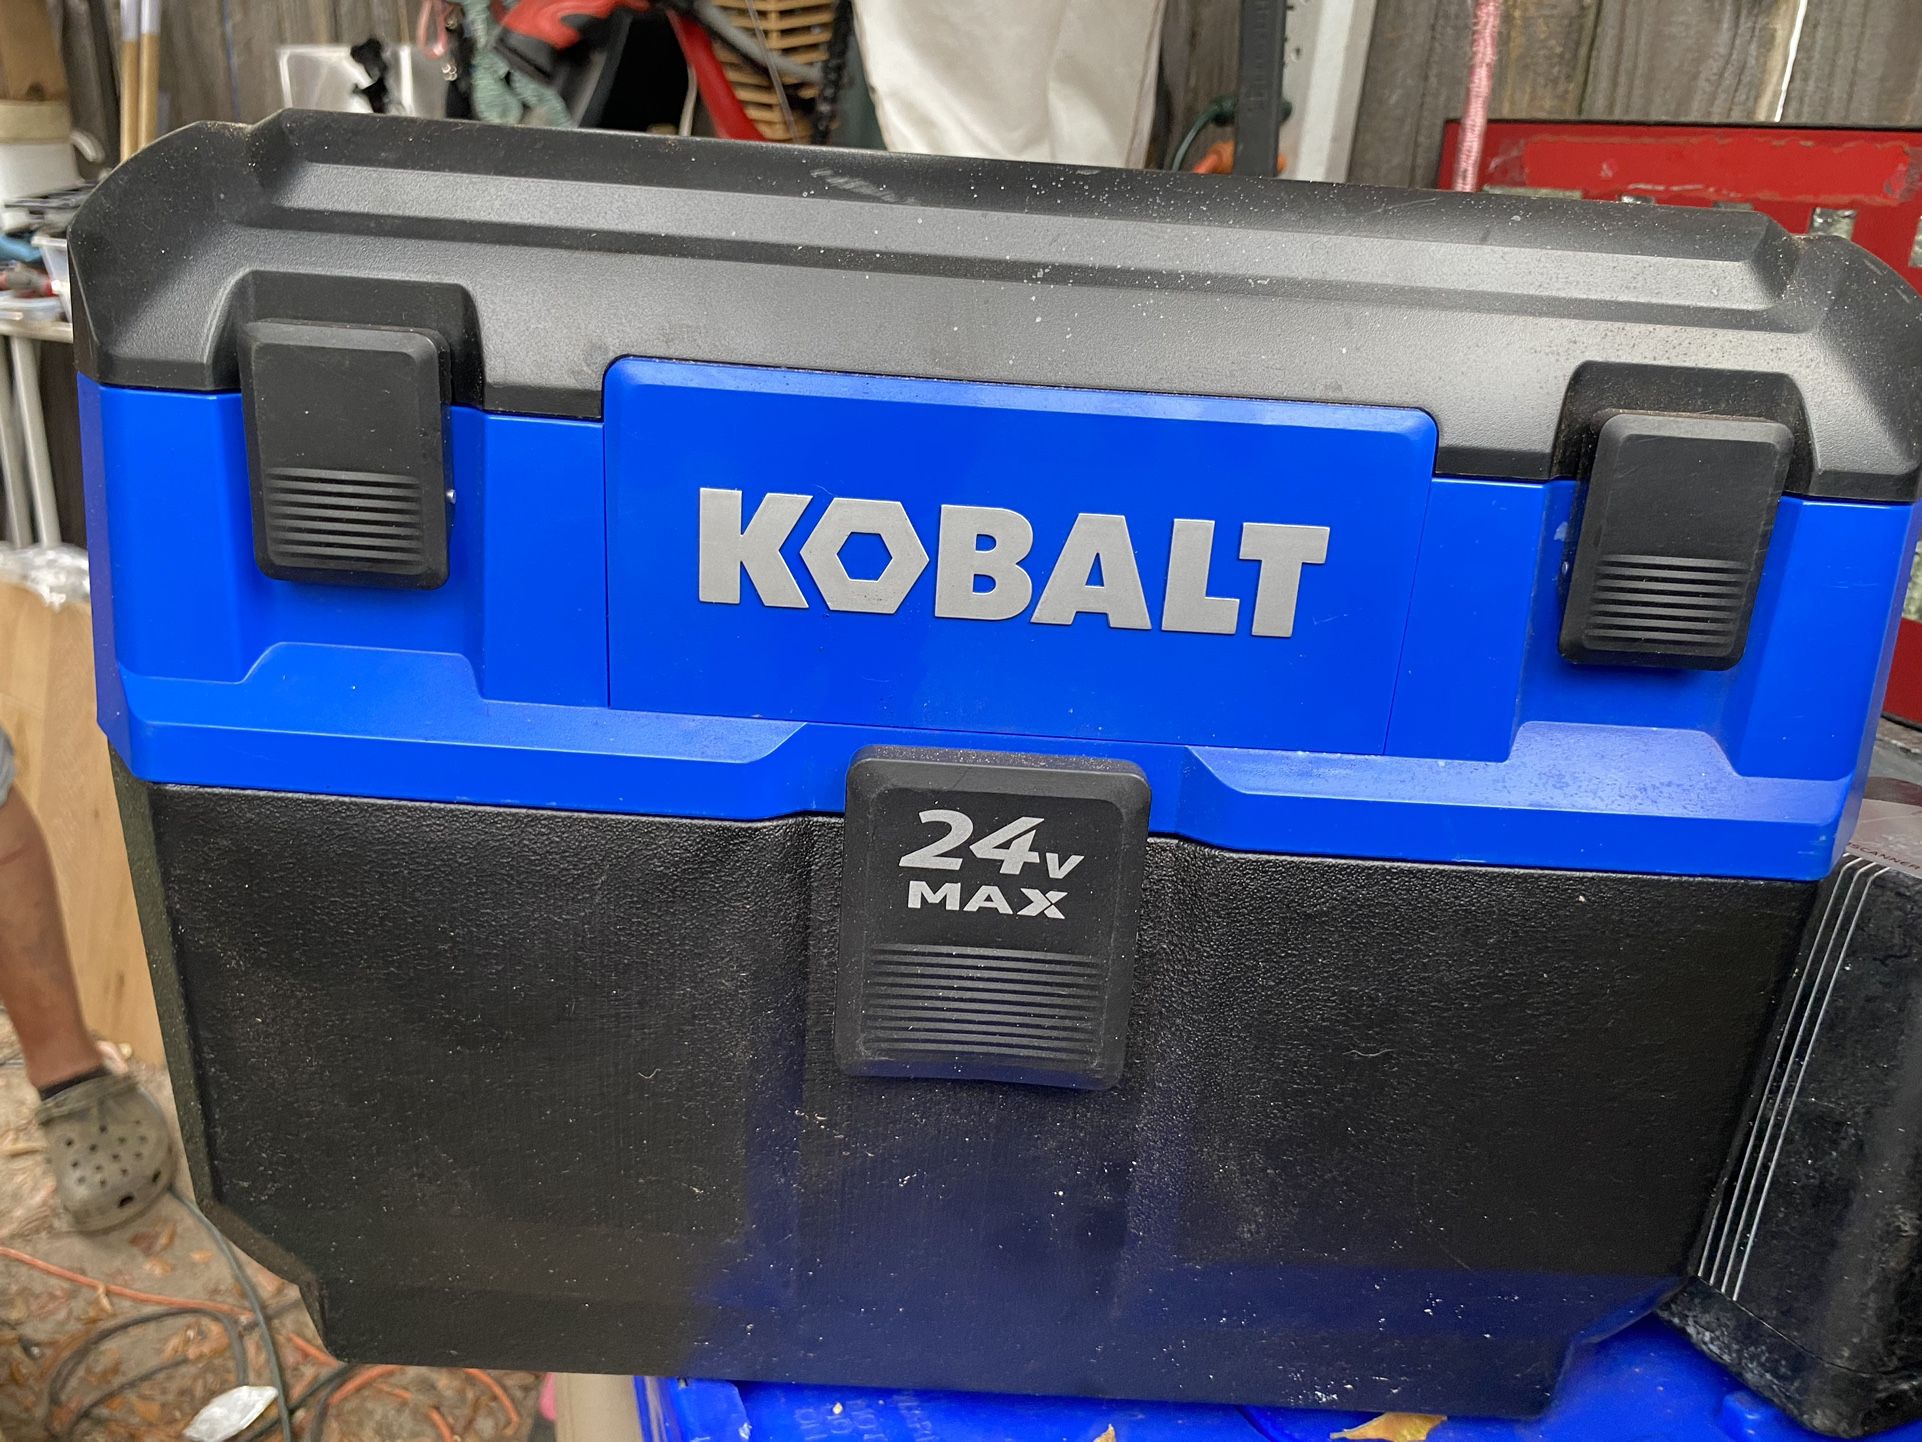 Kobalt Blue Portable Vacuum 